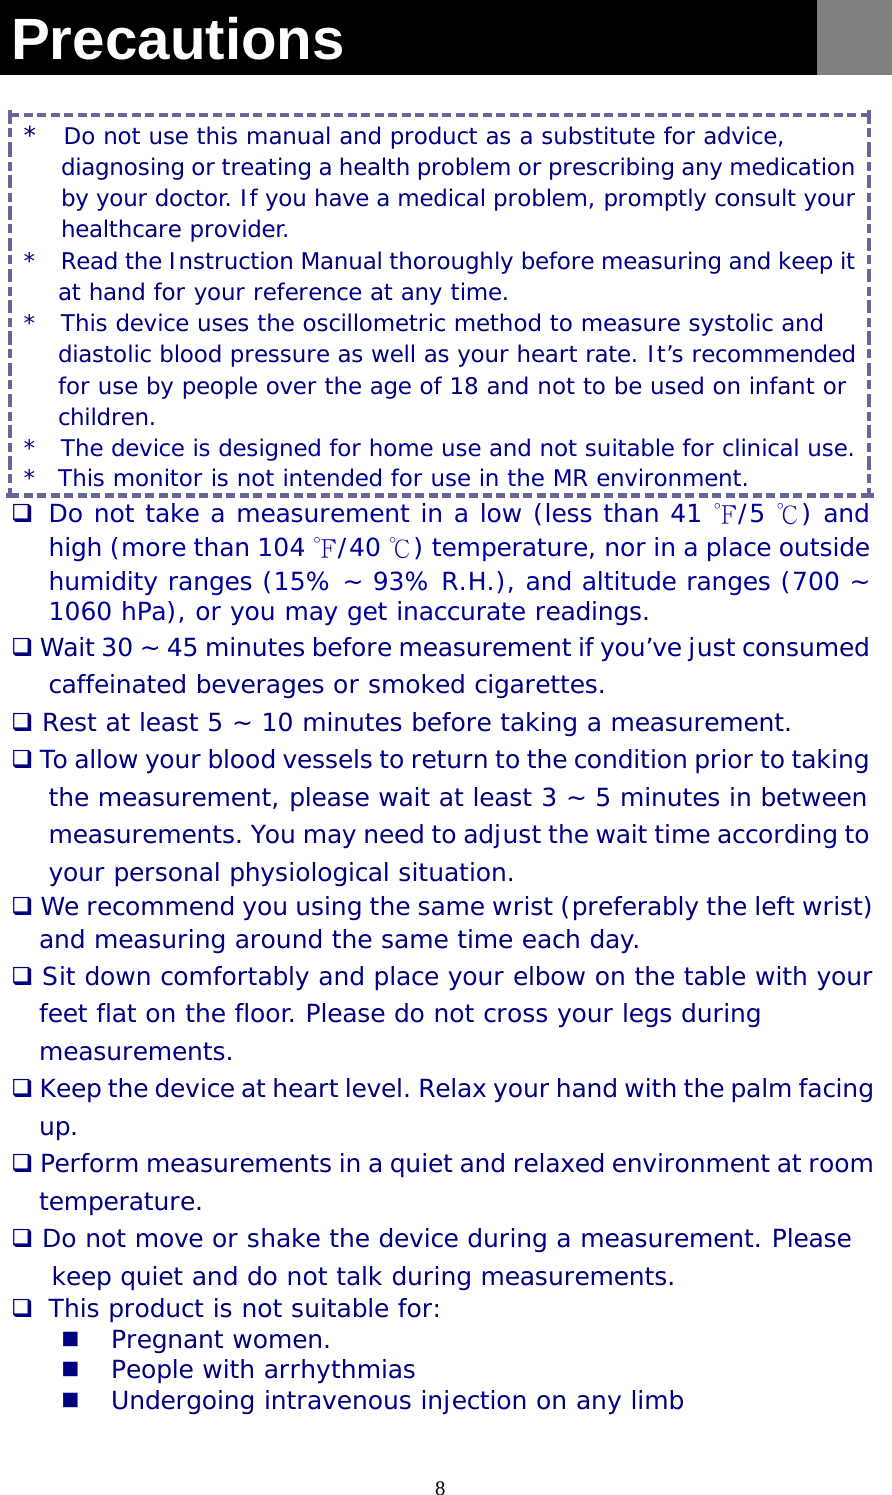 sanitas wrist blood pressure monitor instructions